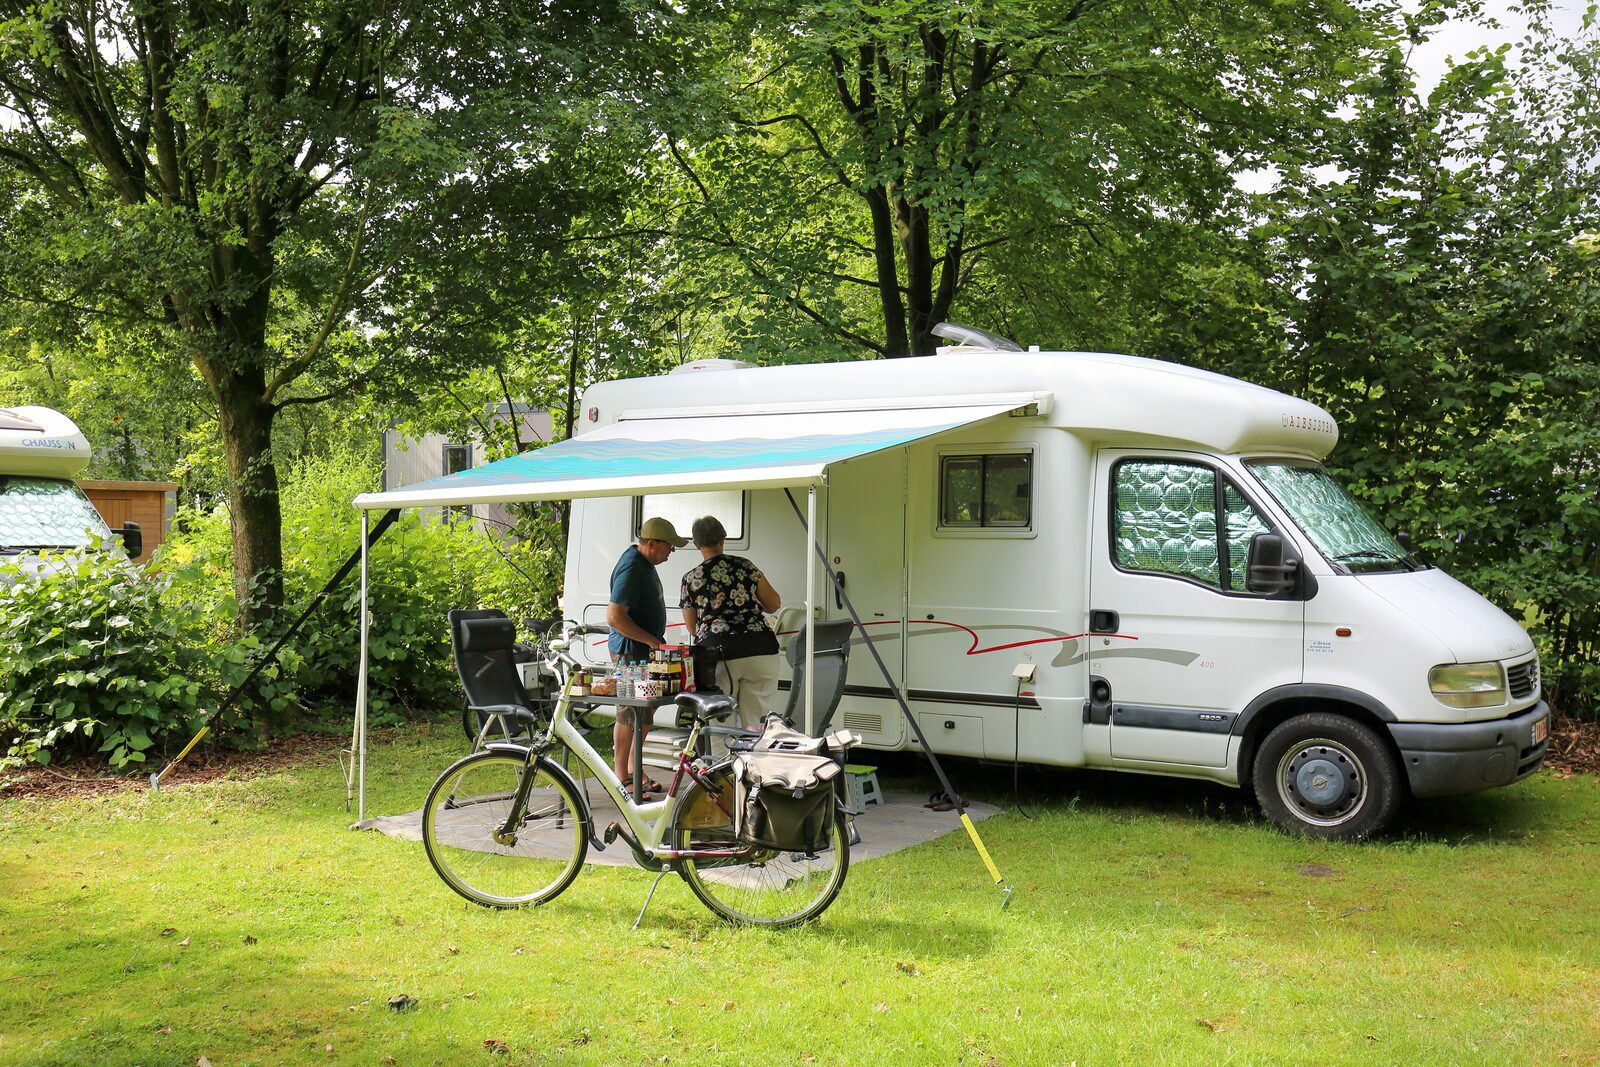 Campsite Baalse Hei in Turnhout